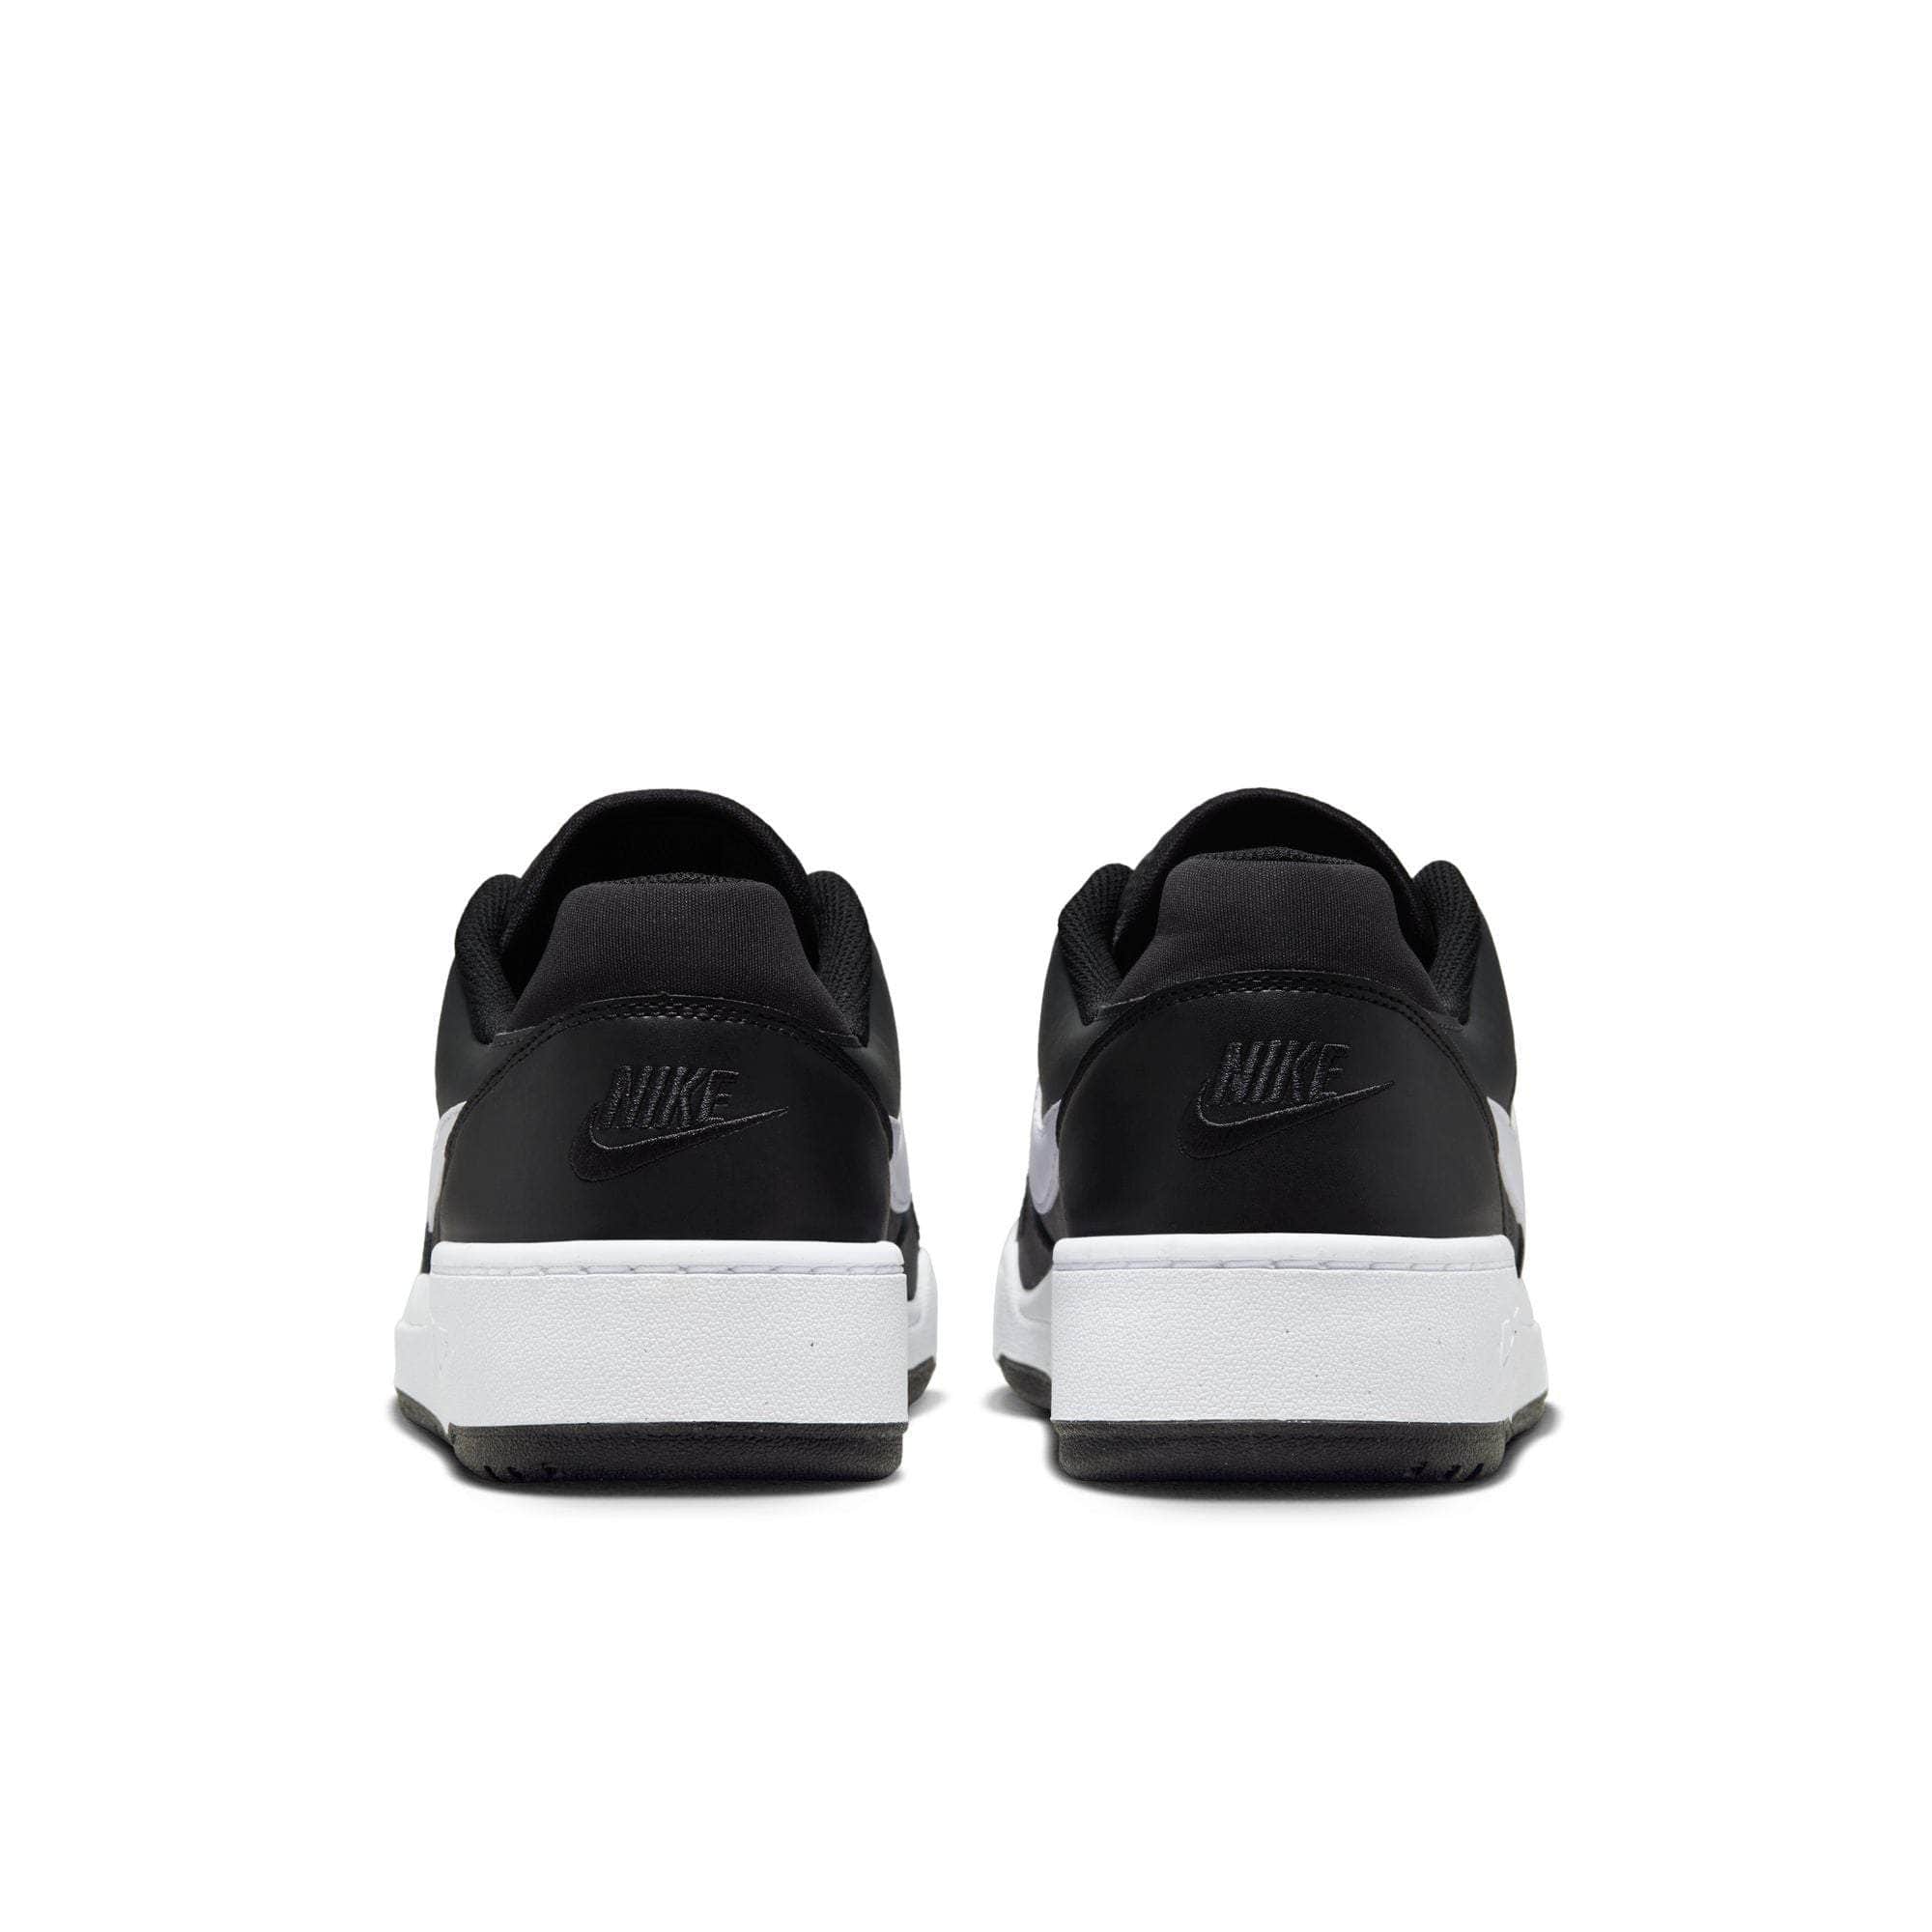 Nike FOOTWEAR Nike Full Force Low "Black White" - Men's